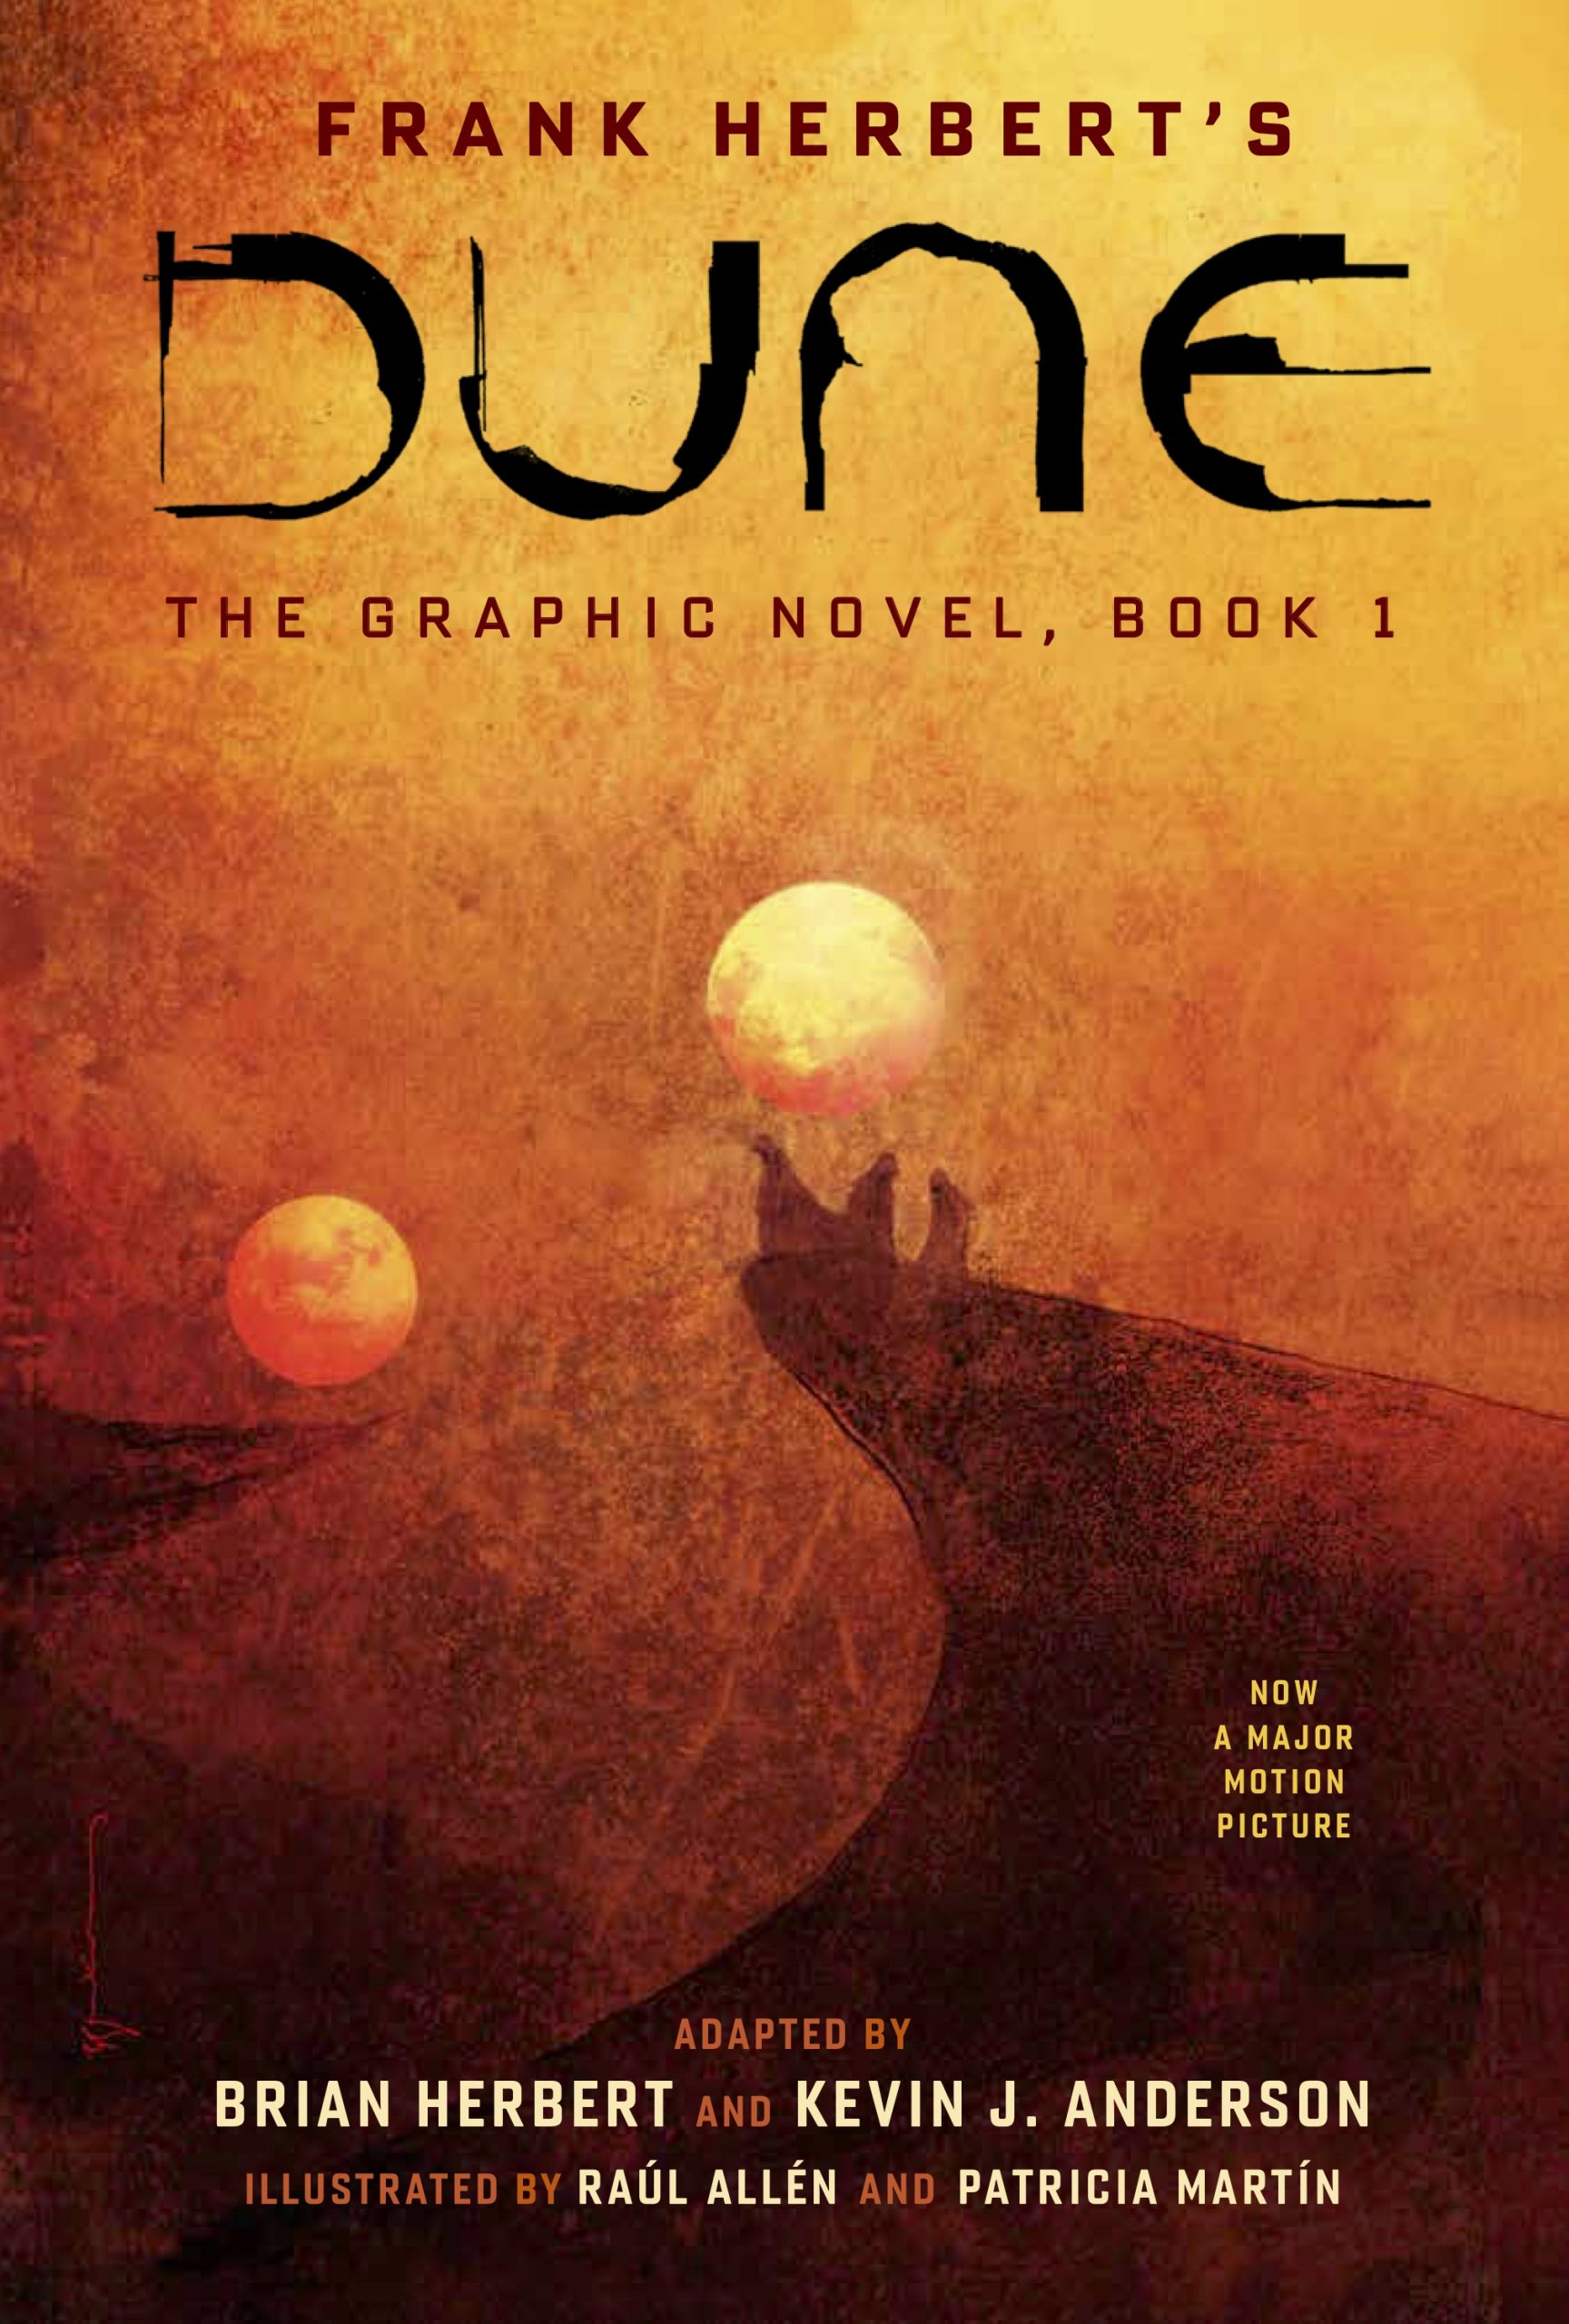 Frank Herbert's Dune the Graphic Novel book 1